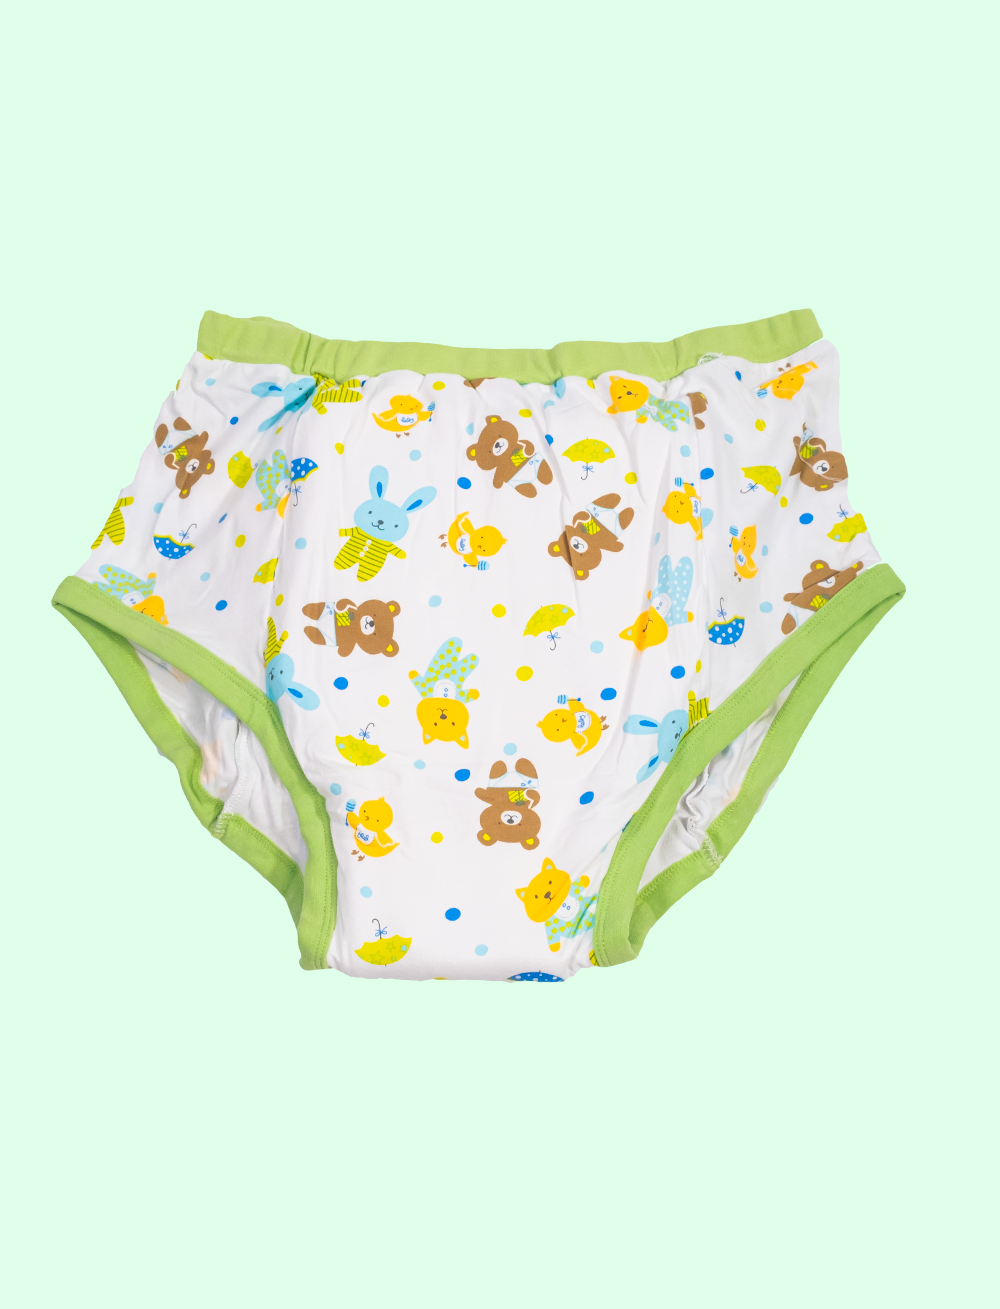 Teddyy baby diaper pants review - YouTube